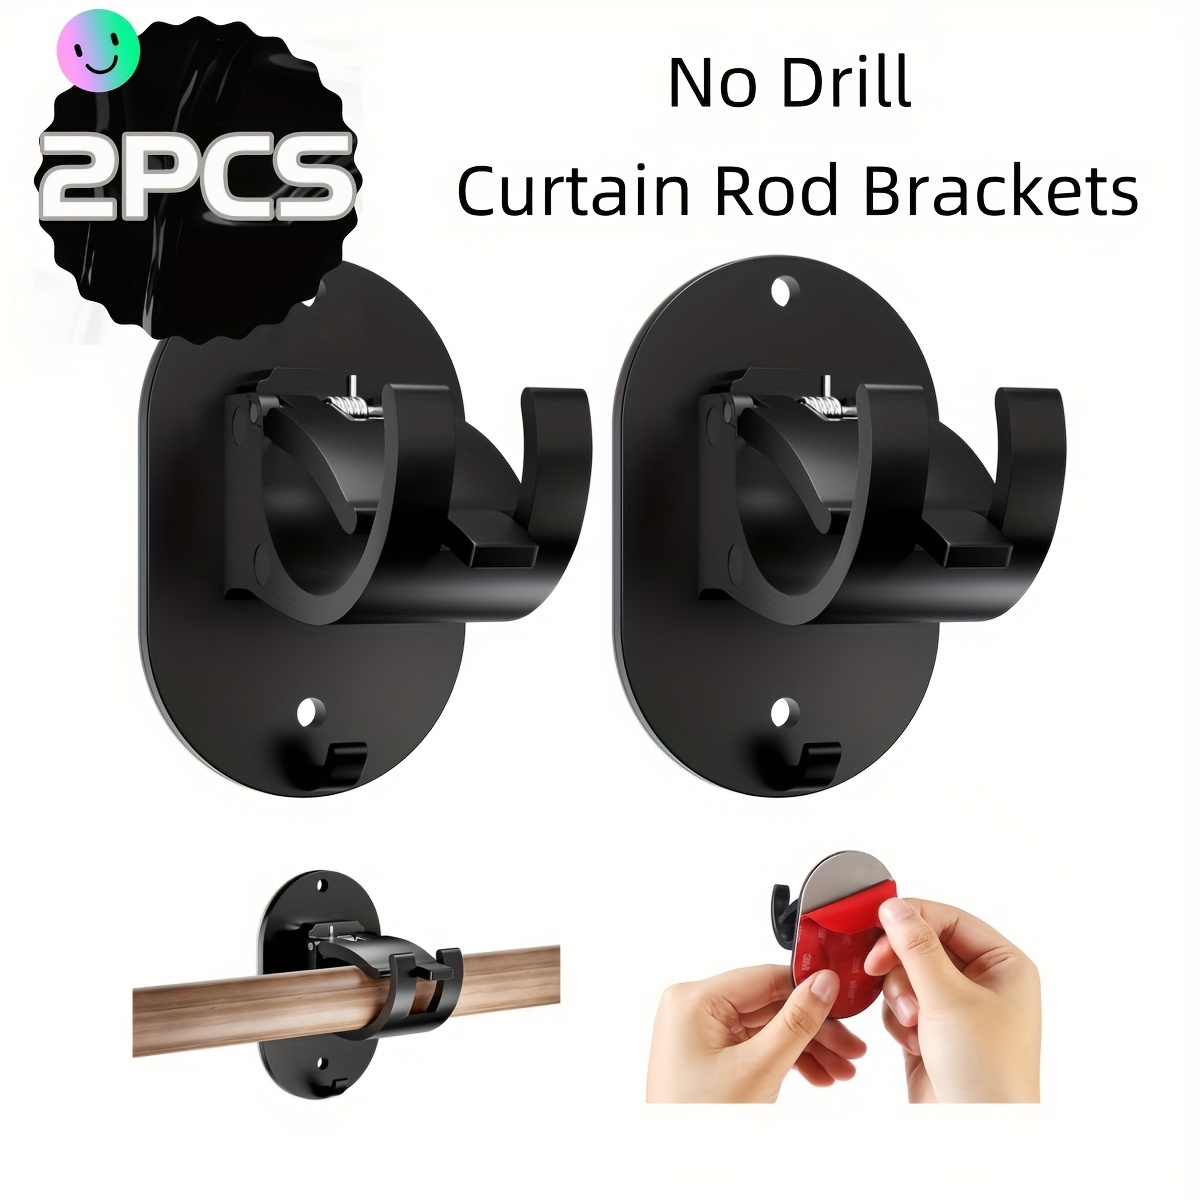 8Pcs No Drill Curtain Rod Brackets No Drilling Self Adhesive